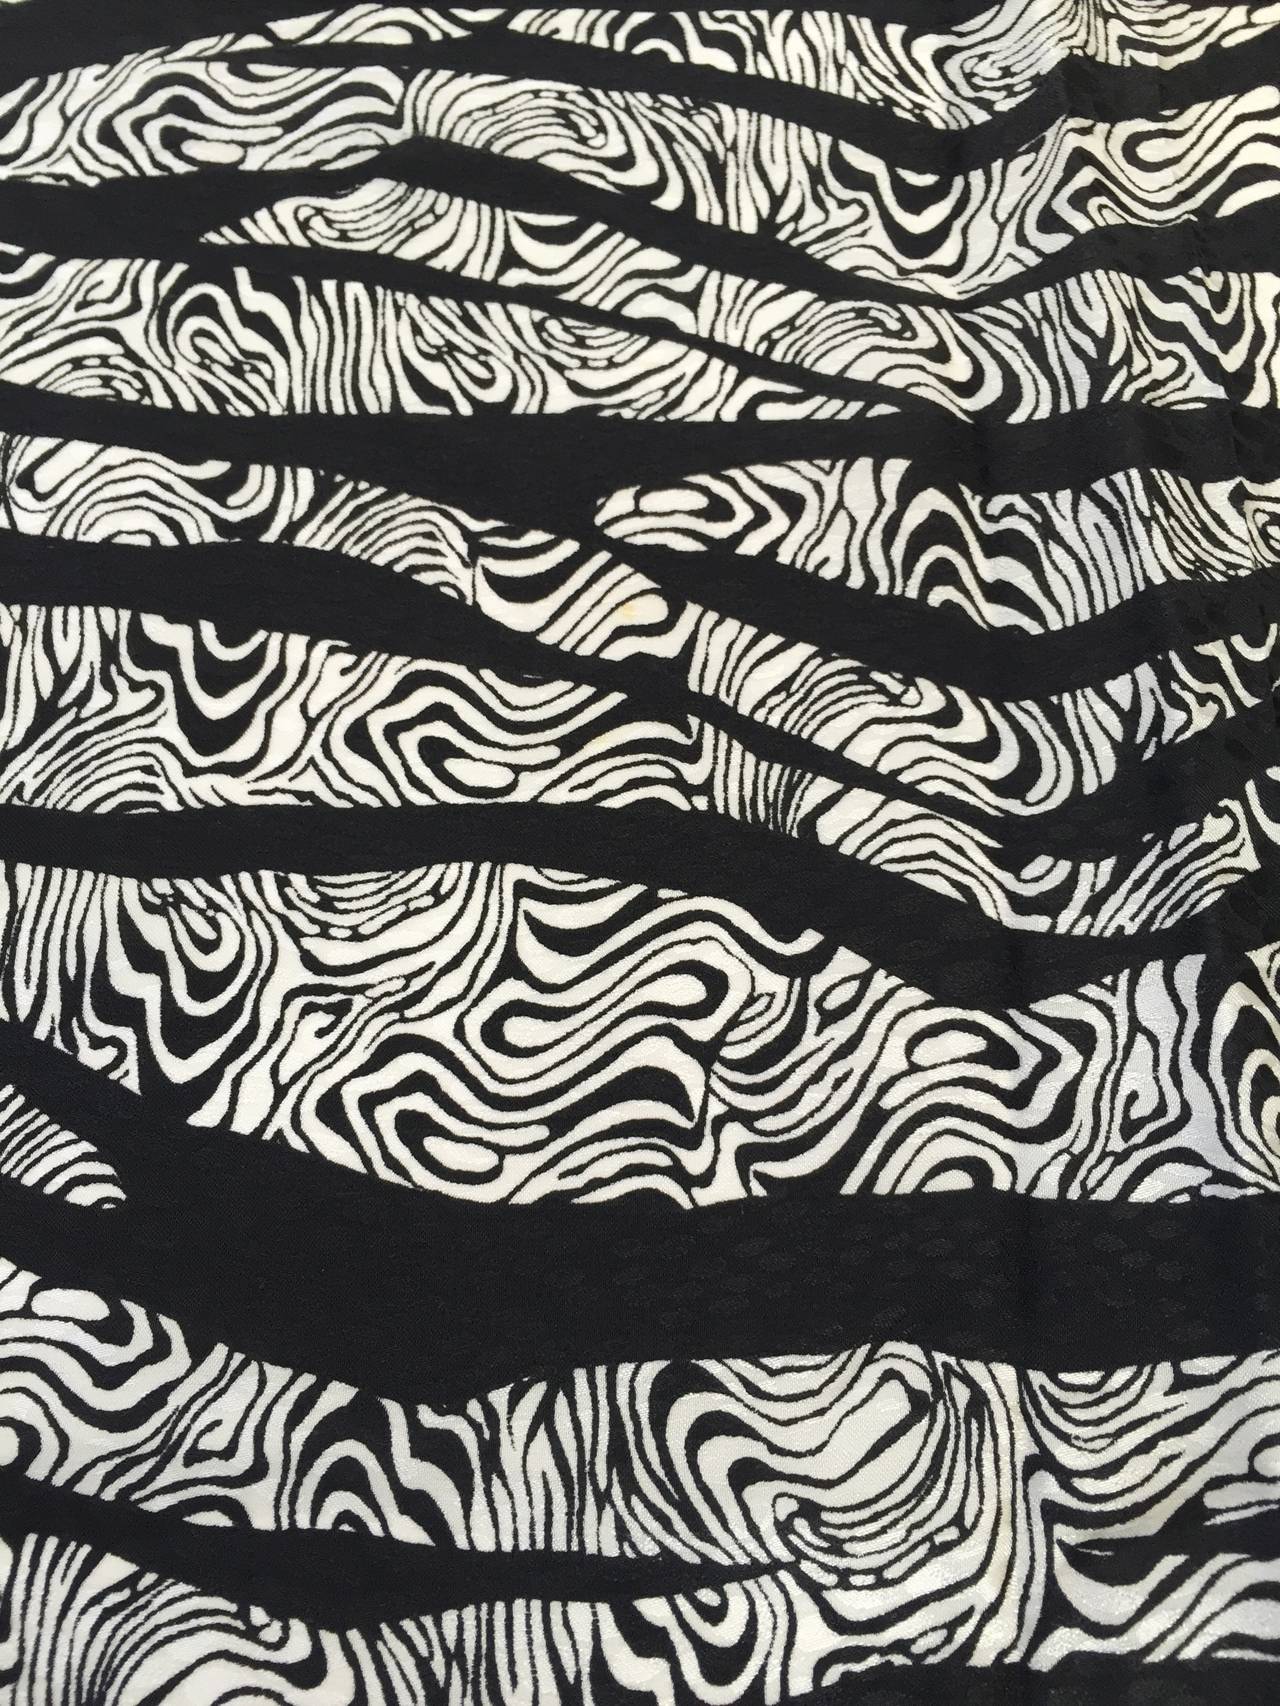 Women's Yves Saint Laurent 80s zebra print silk scarf.